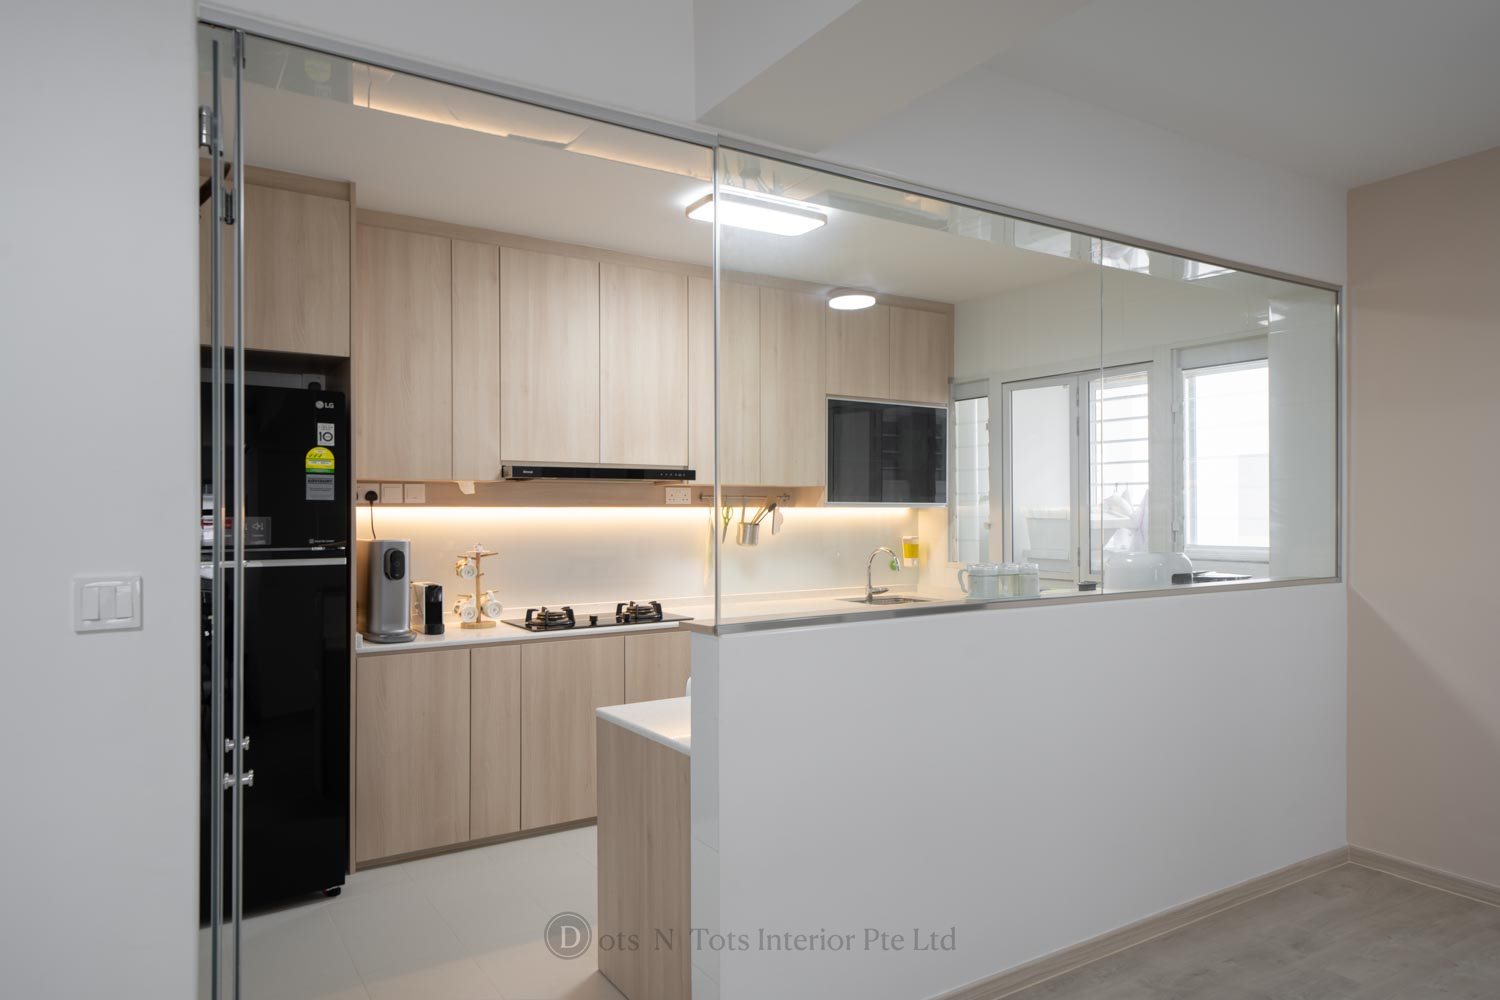 Minimalist, Modern, Others Design - Kitchen - HDB 5 Room - Design by Dots n Tots Interior Pte Ltd